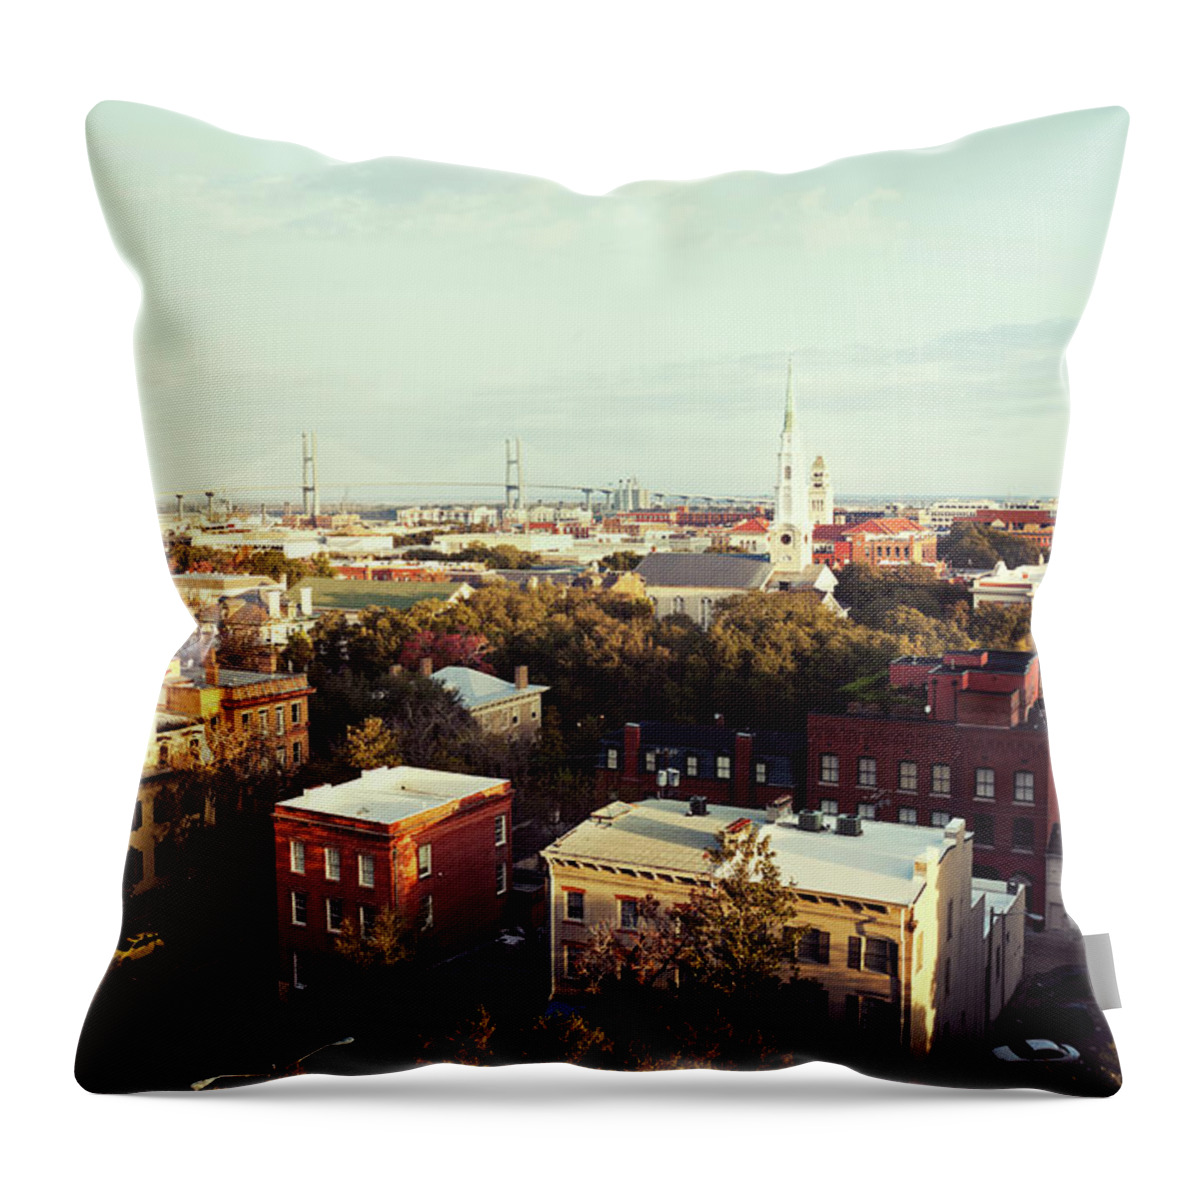 Scenics Throw Pillow featuring the photograph Usa, Georgia, Savannah, Cityscape by Henryk Sadura